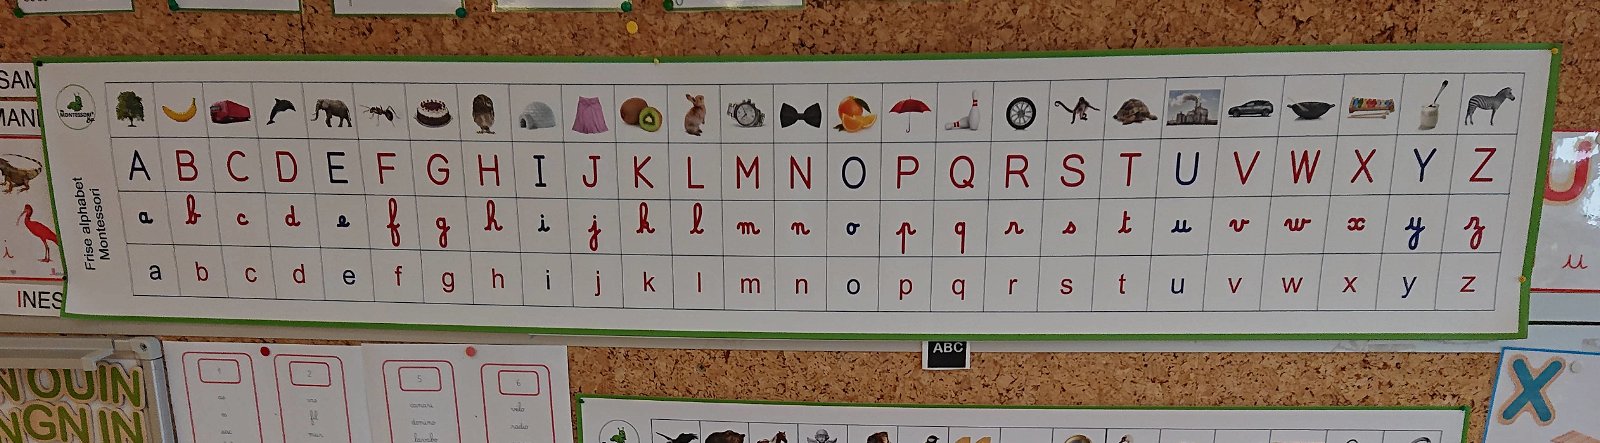 Mamontessoribox frise alphabet v1